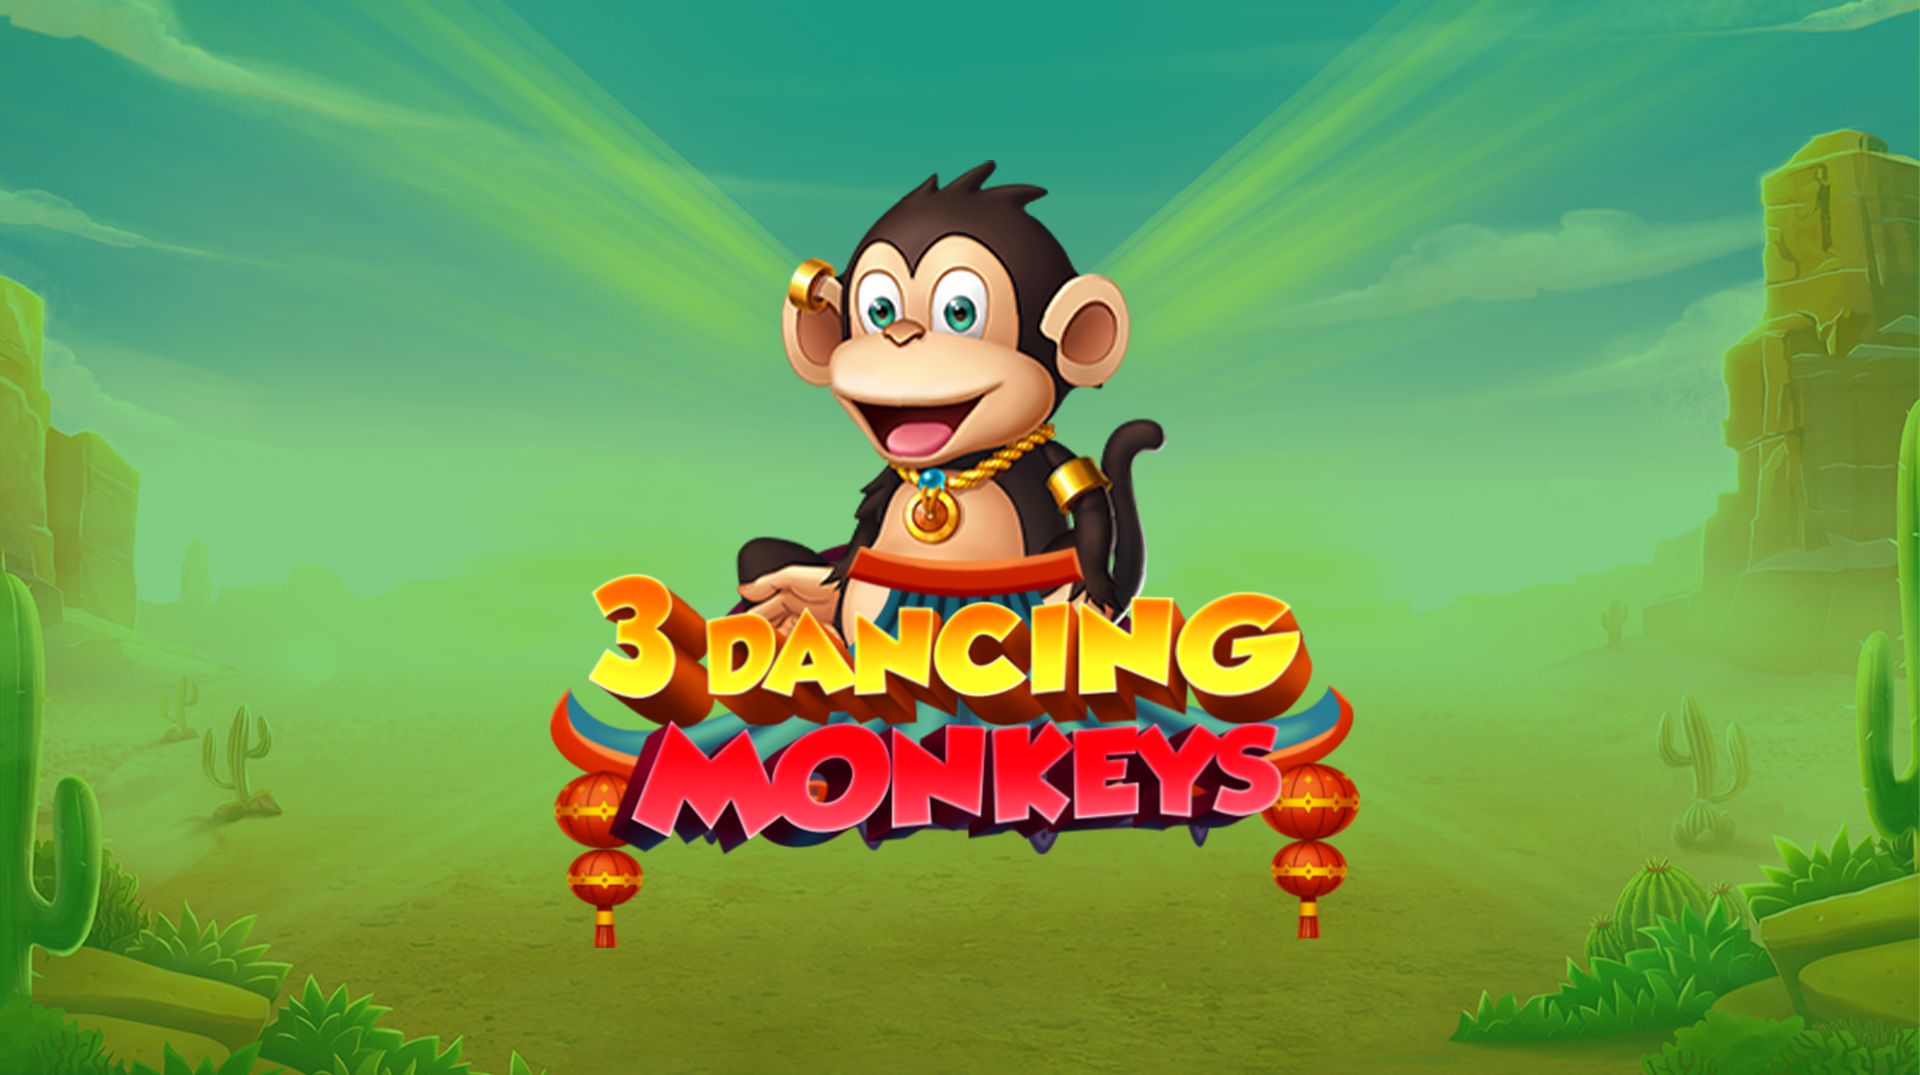 3 Dancing Monkeys slot machine Betaland casino